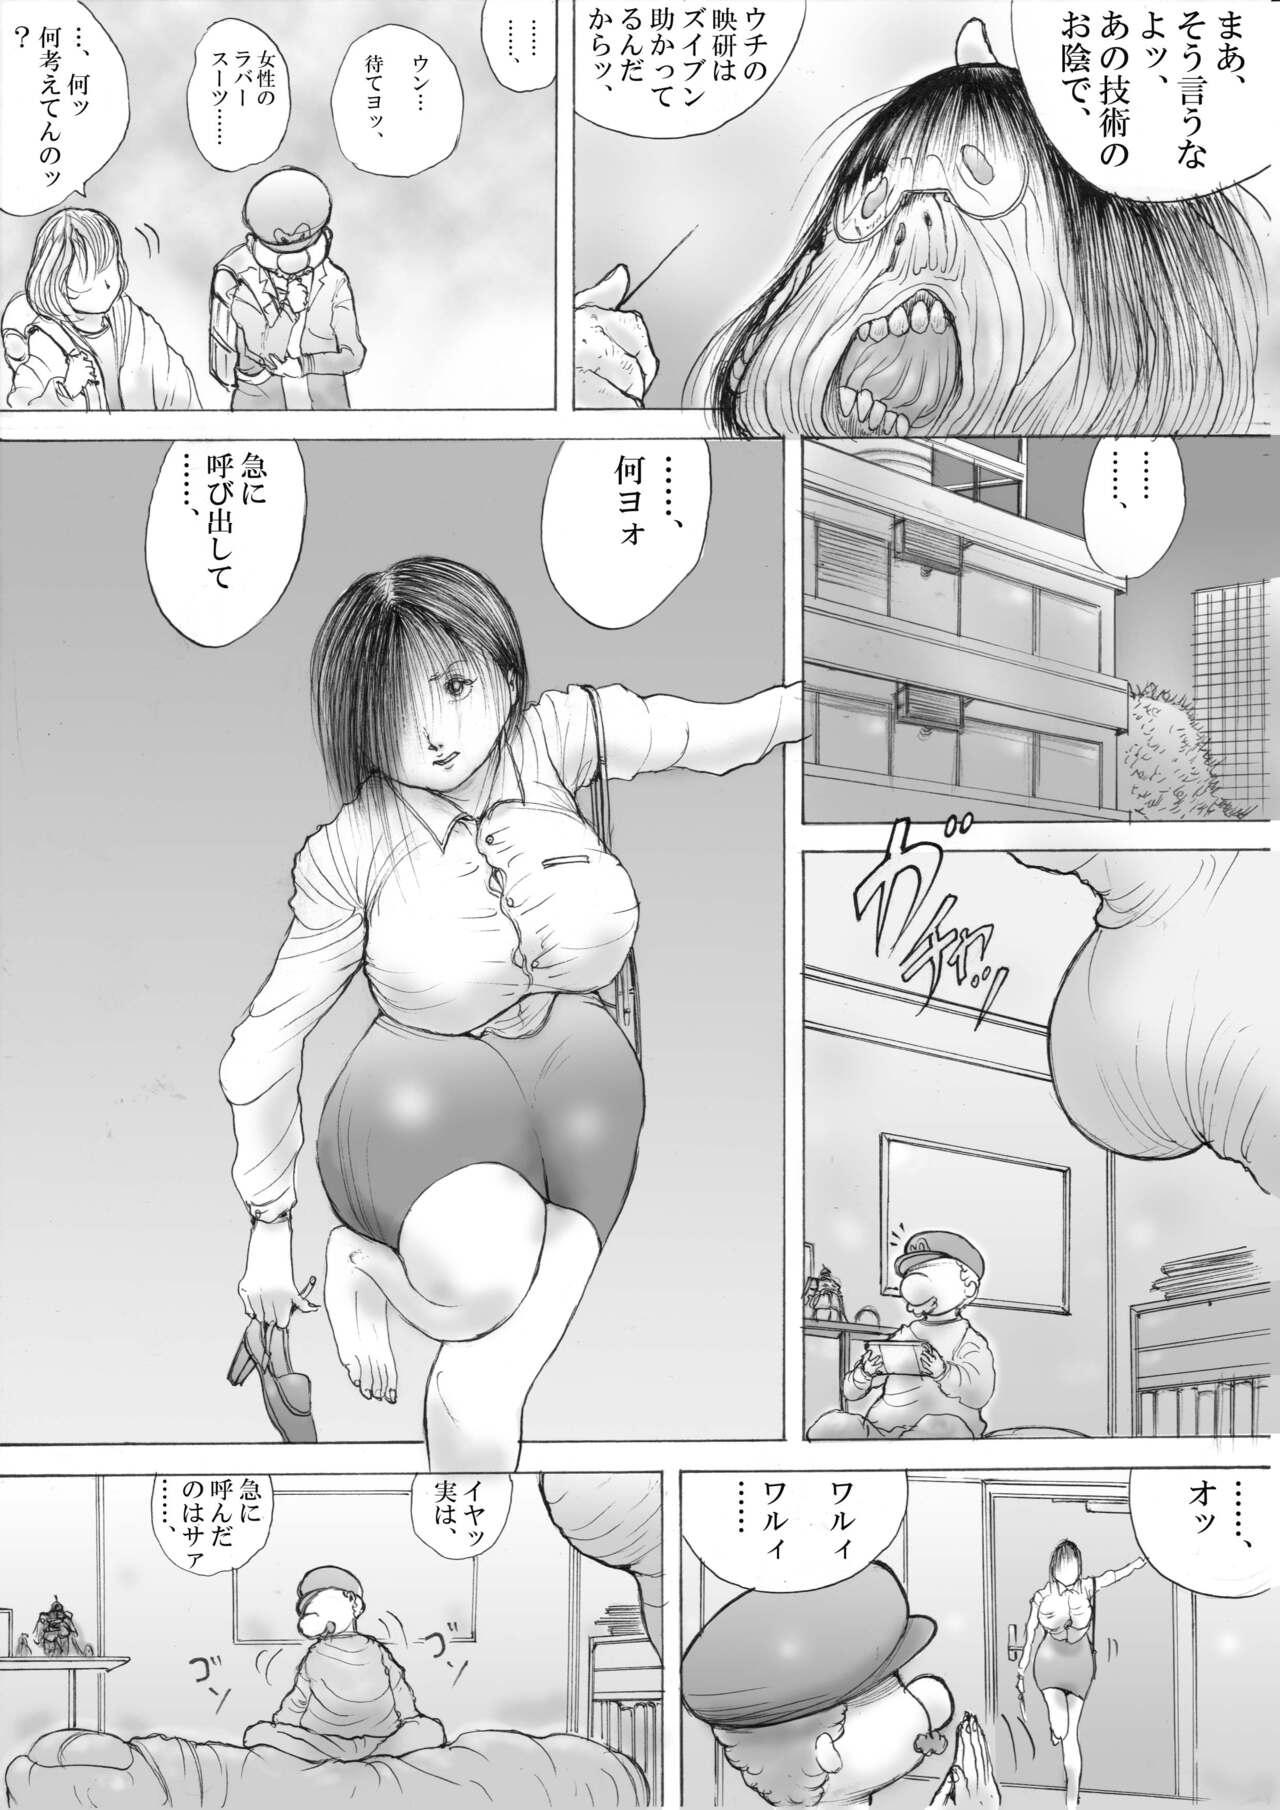 Horror Manga 9 4